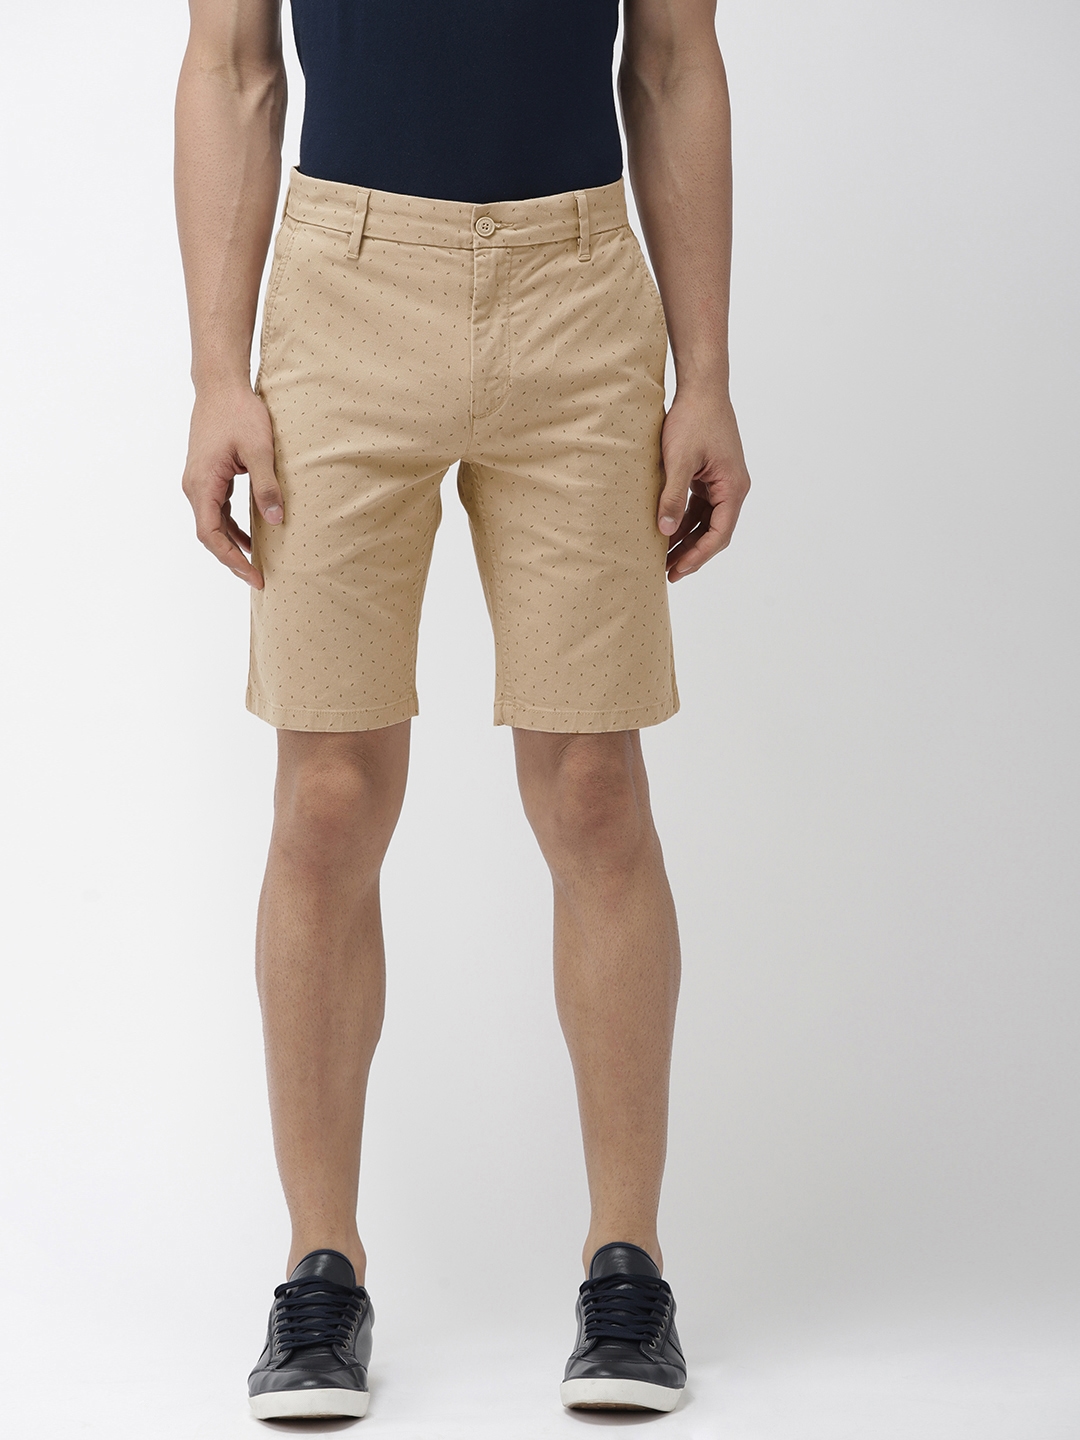 Levi's Chino Shorts Flash Sales, 60% OFF | lagence.tv